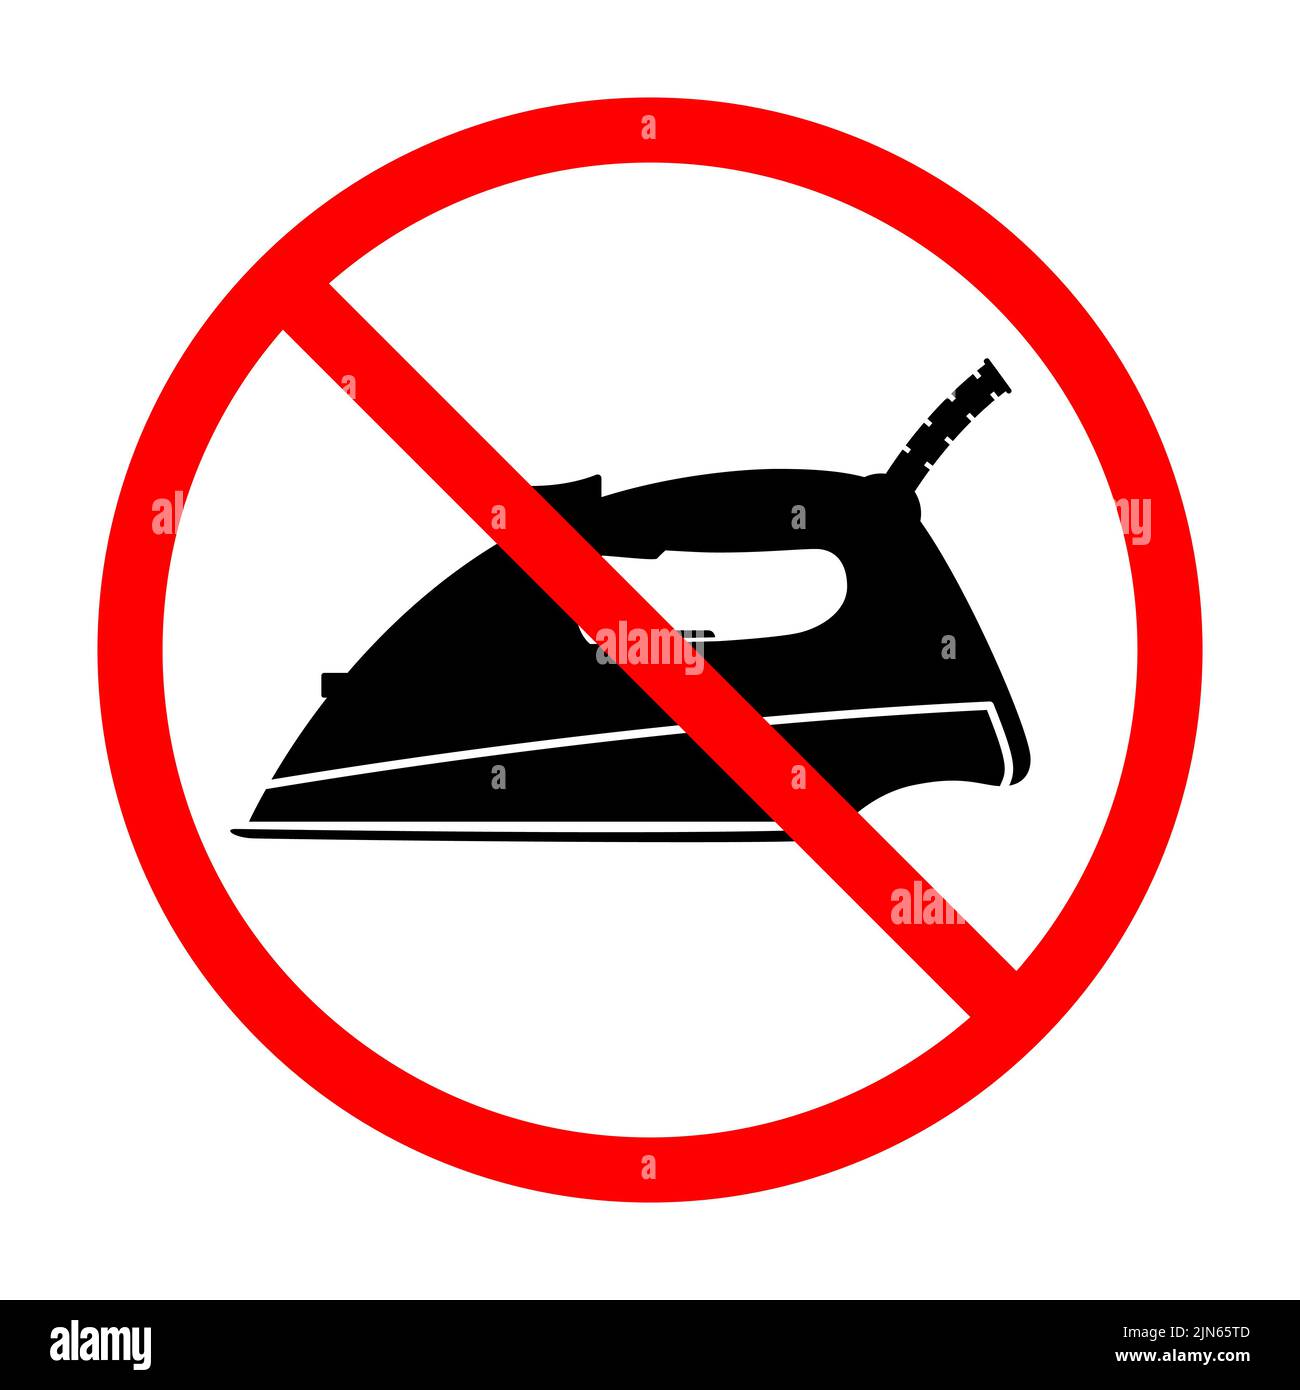 Ironing prohibition sign. Iron ban sign. No ironing sign. Vector illustration. Stock Vector